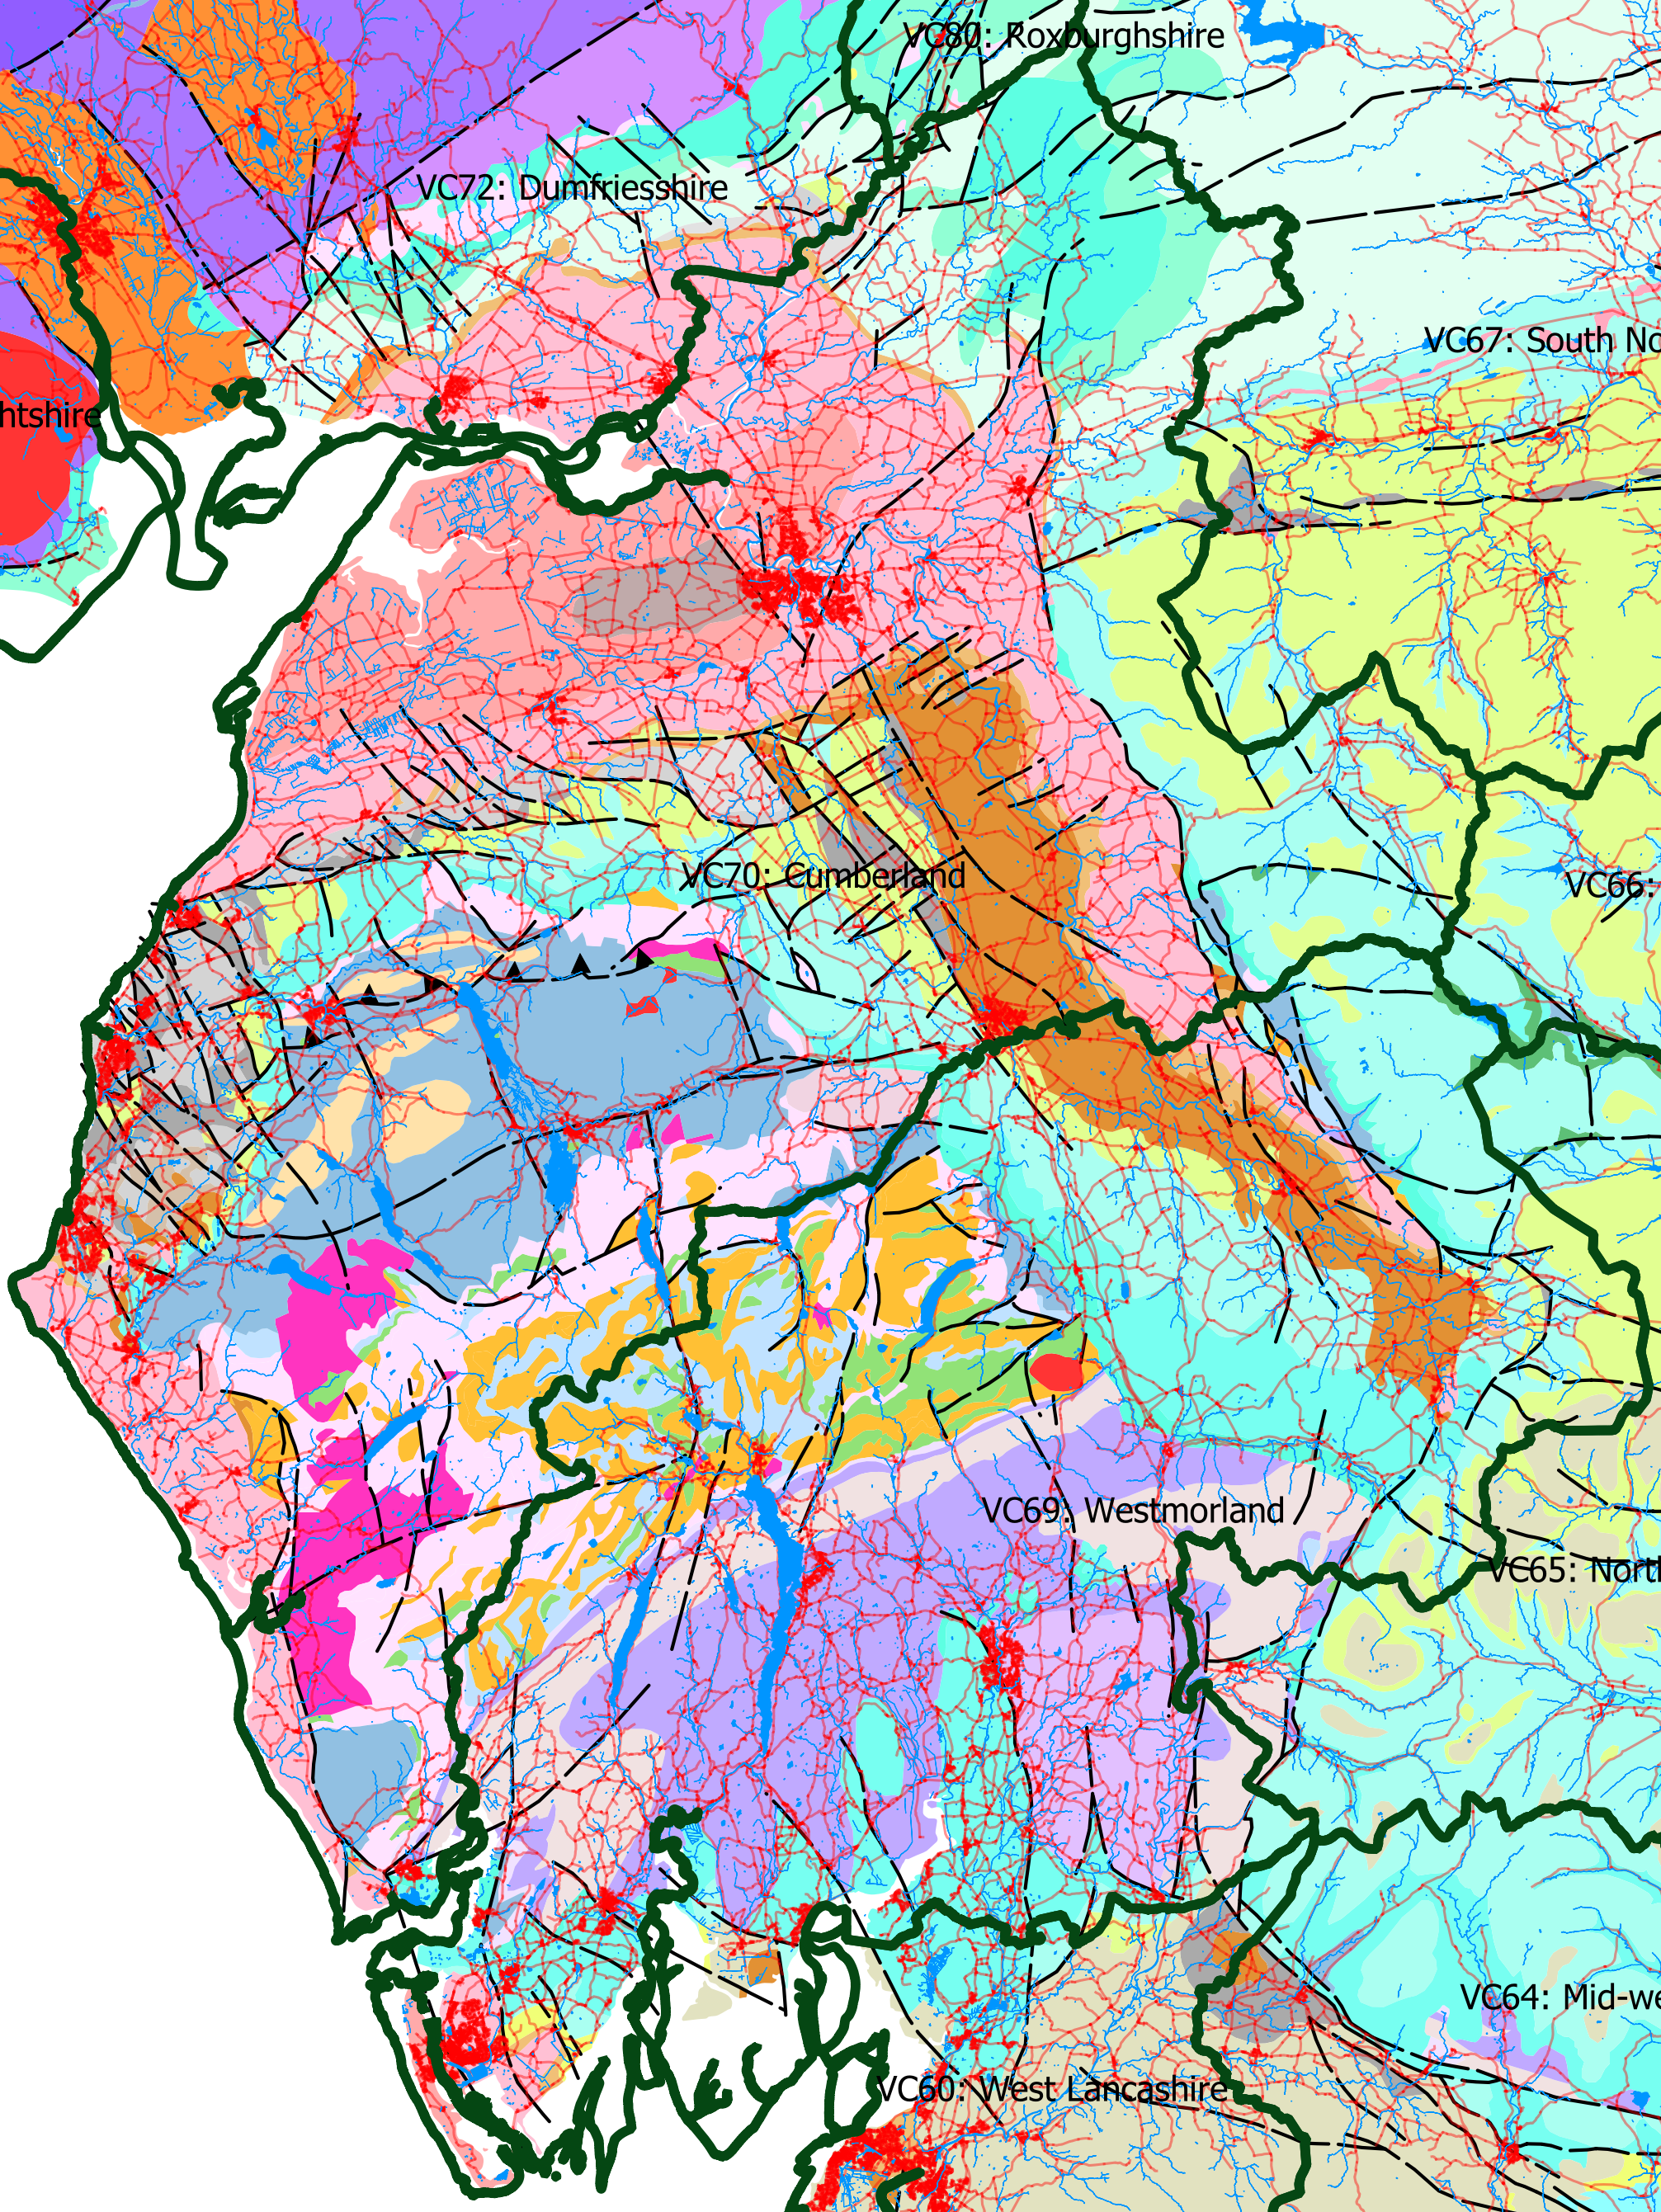 Cumbria’s varied bedrock geology